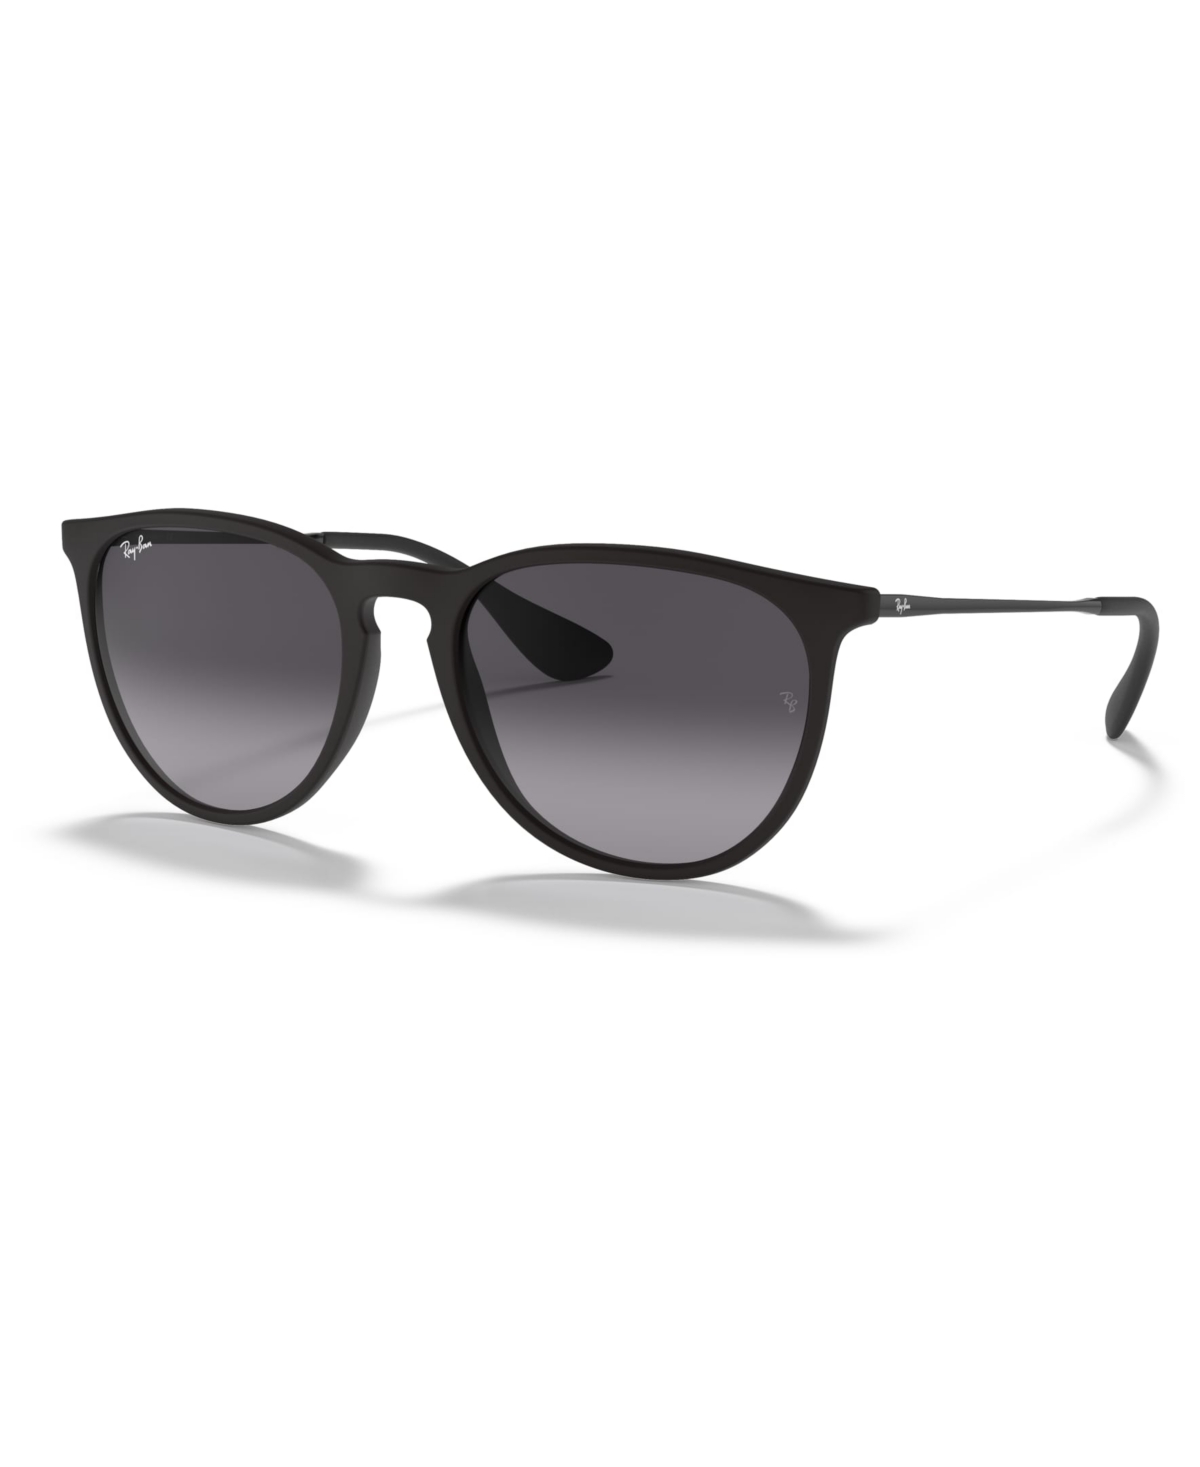 Unisex Low Bridge Fit Sunglasses, RB4171F Erika - Matte Black/Grey Gradient